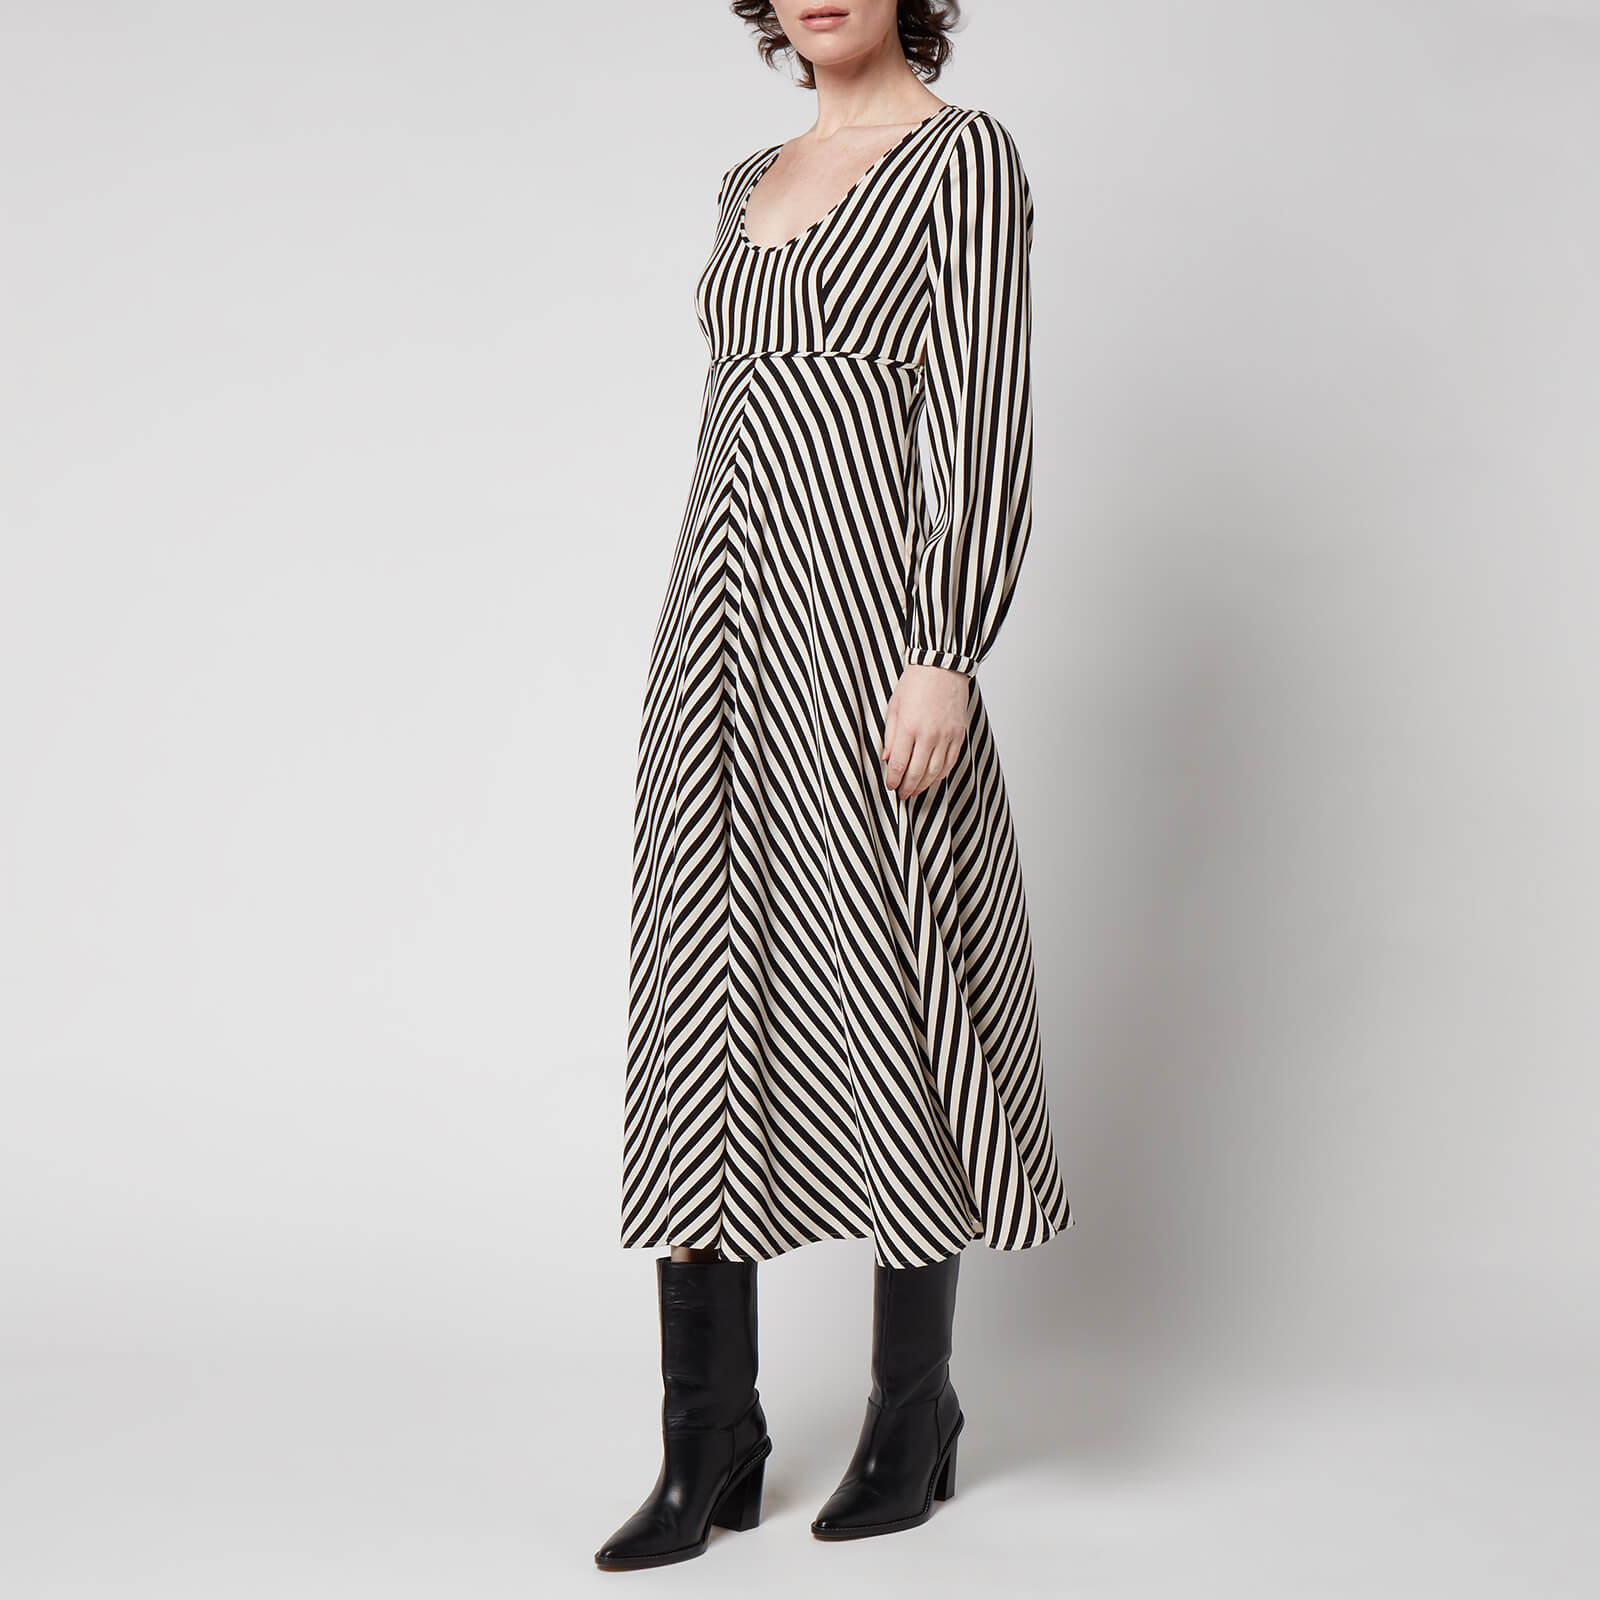 Whistles Women's Misha Diagonal Stripe Print Dress - Black/Multi - UK 6